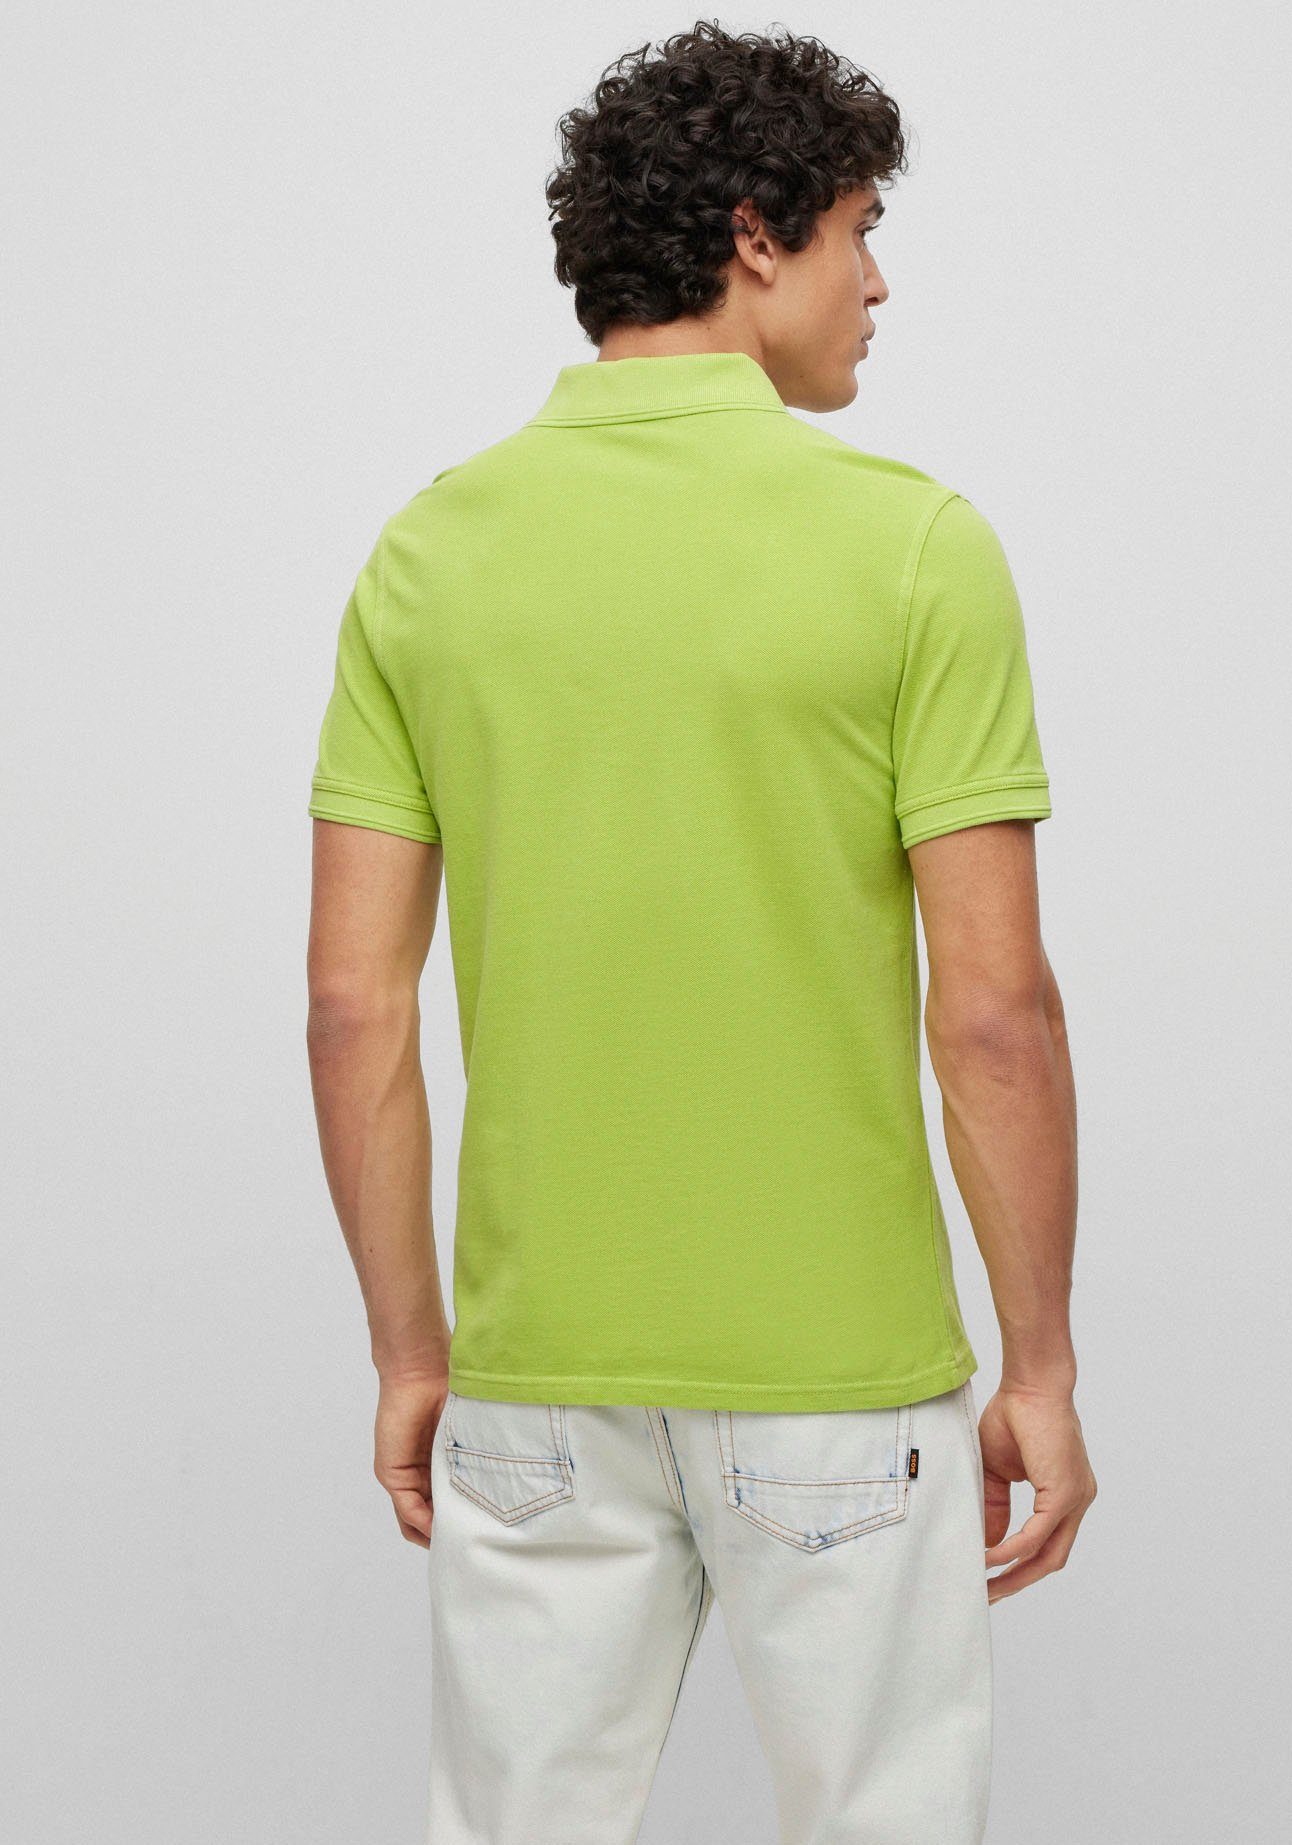 Green Bright Brustkorb Logoschriftzug Poloshirt ORANGE BOSS am mit Prime